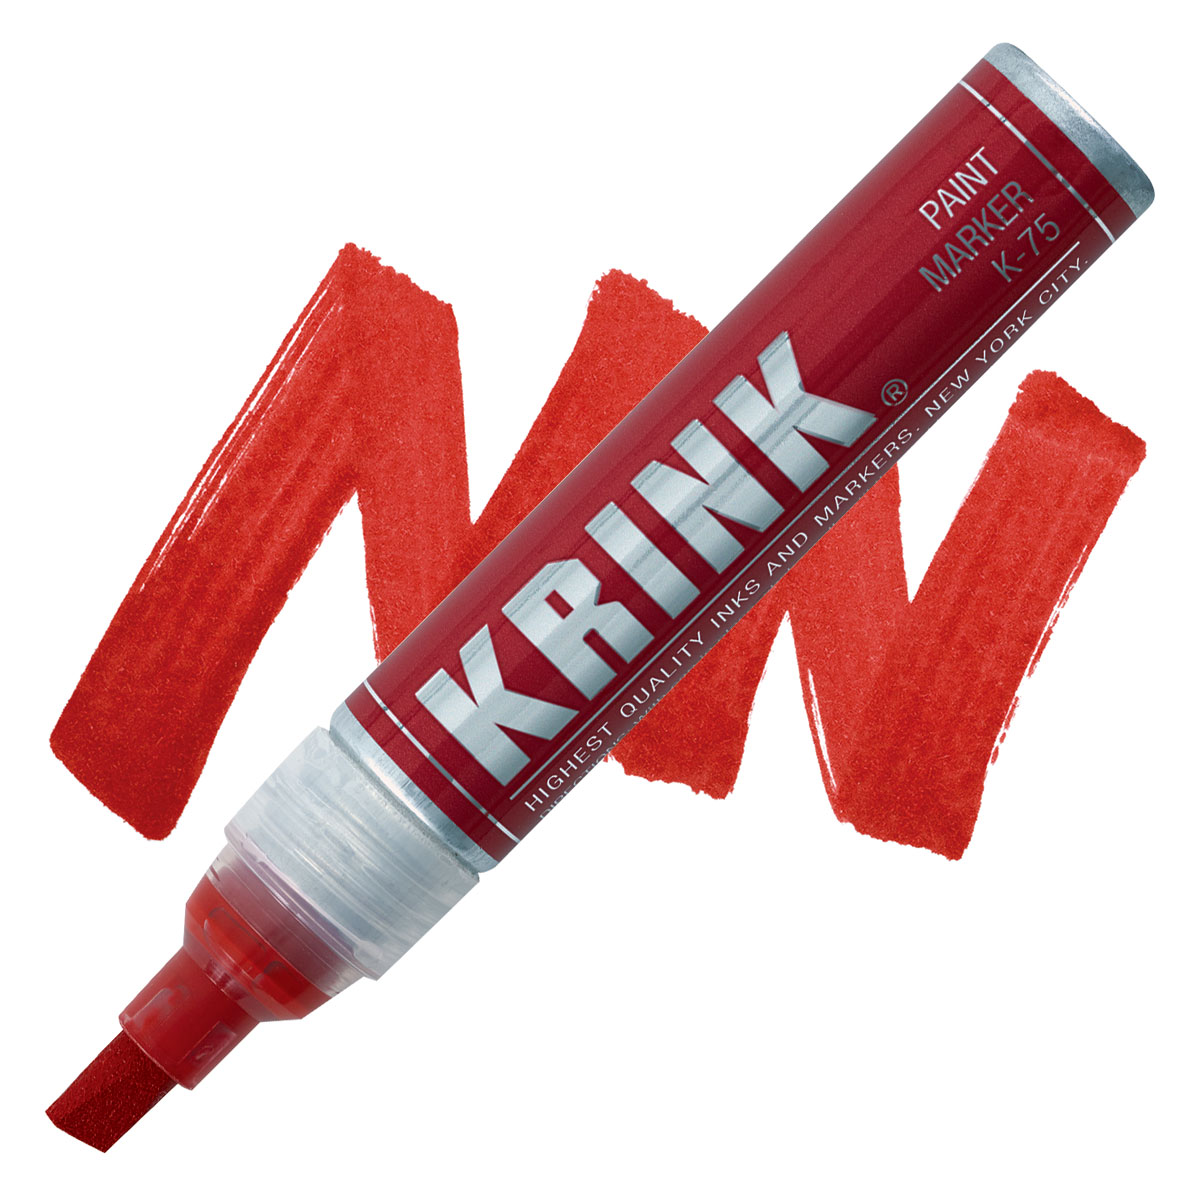 KRINK K-71 K-75 Paint marker Review 